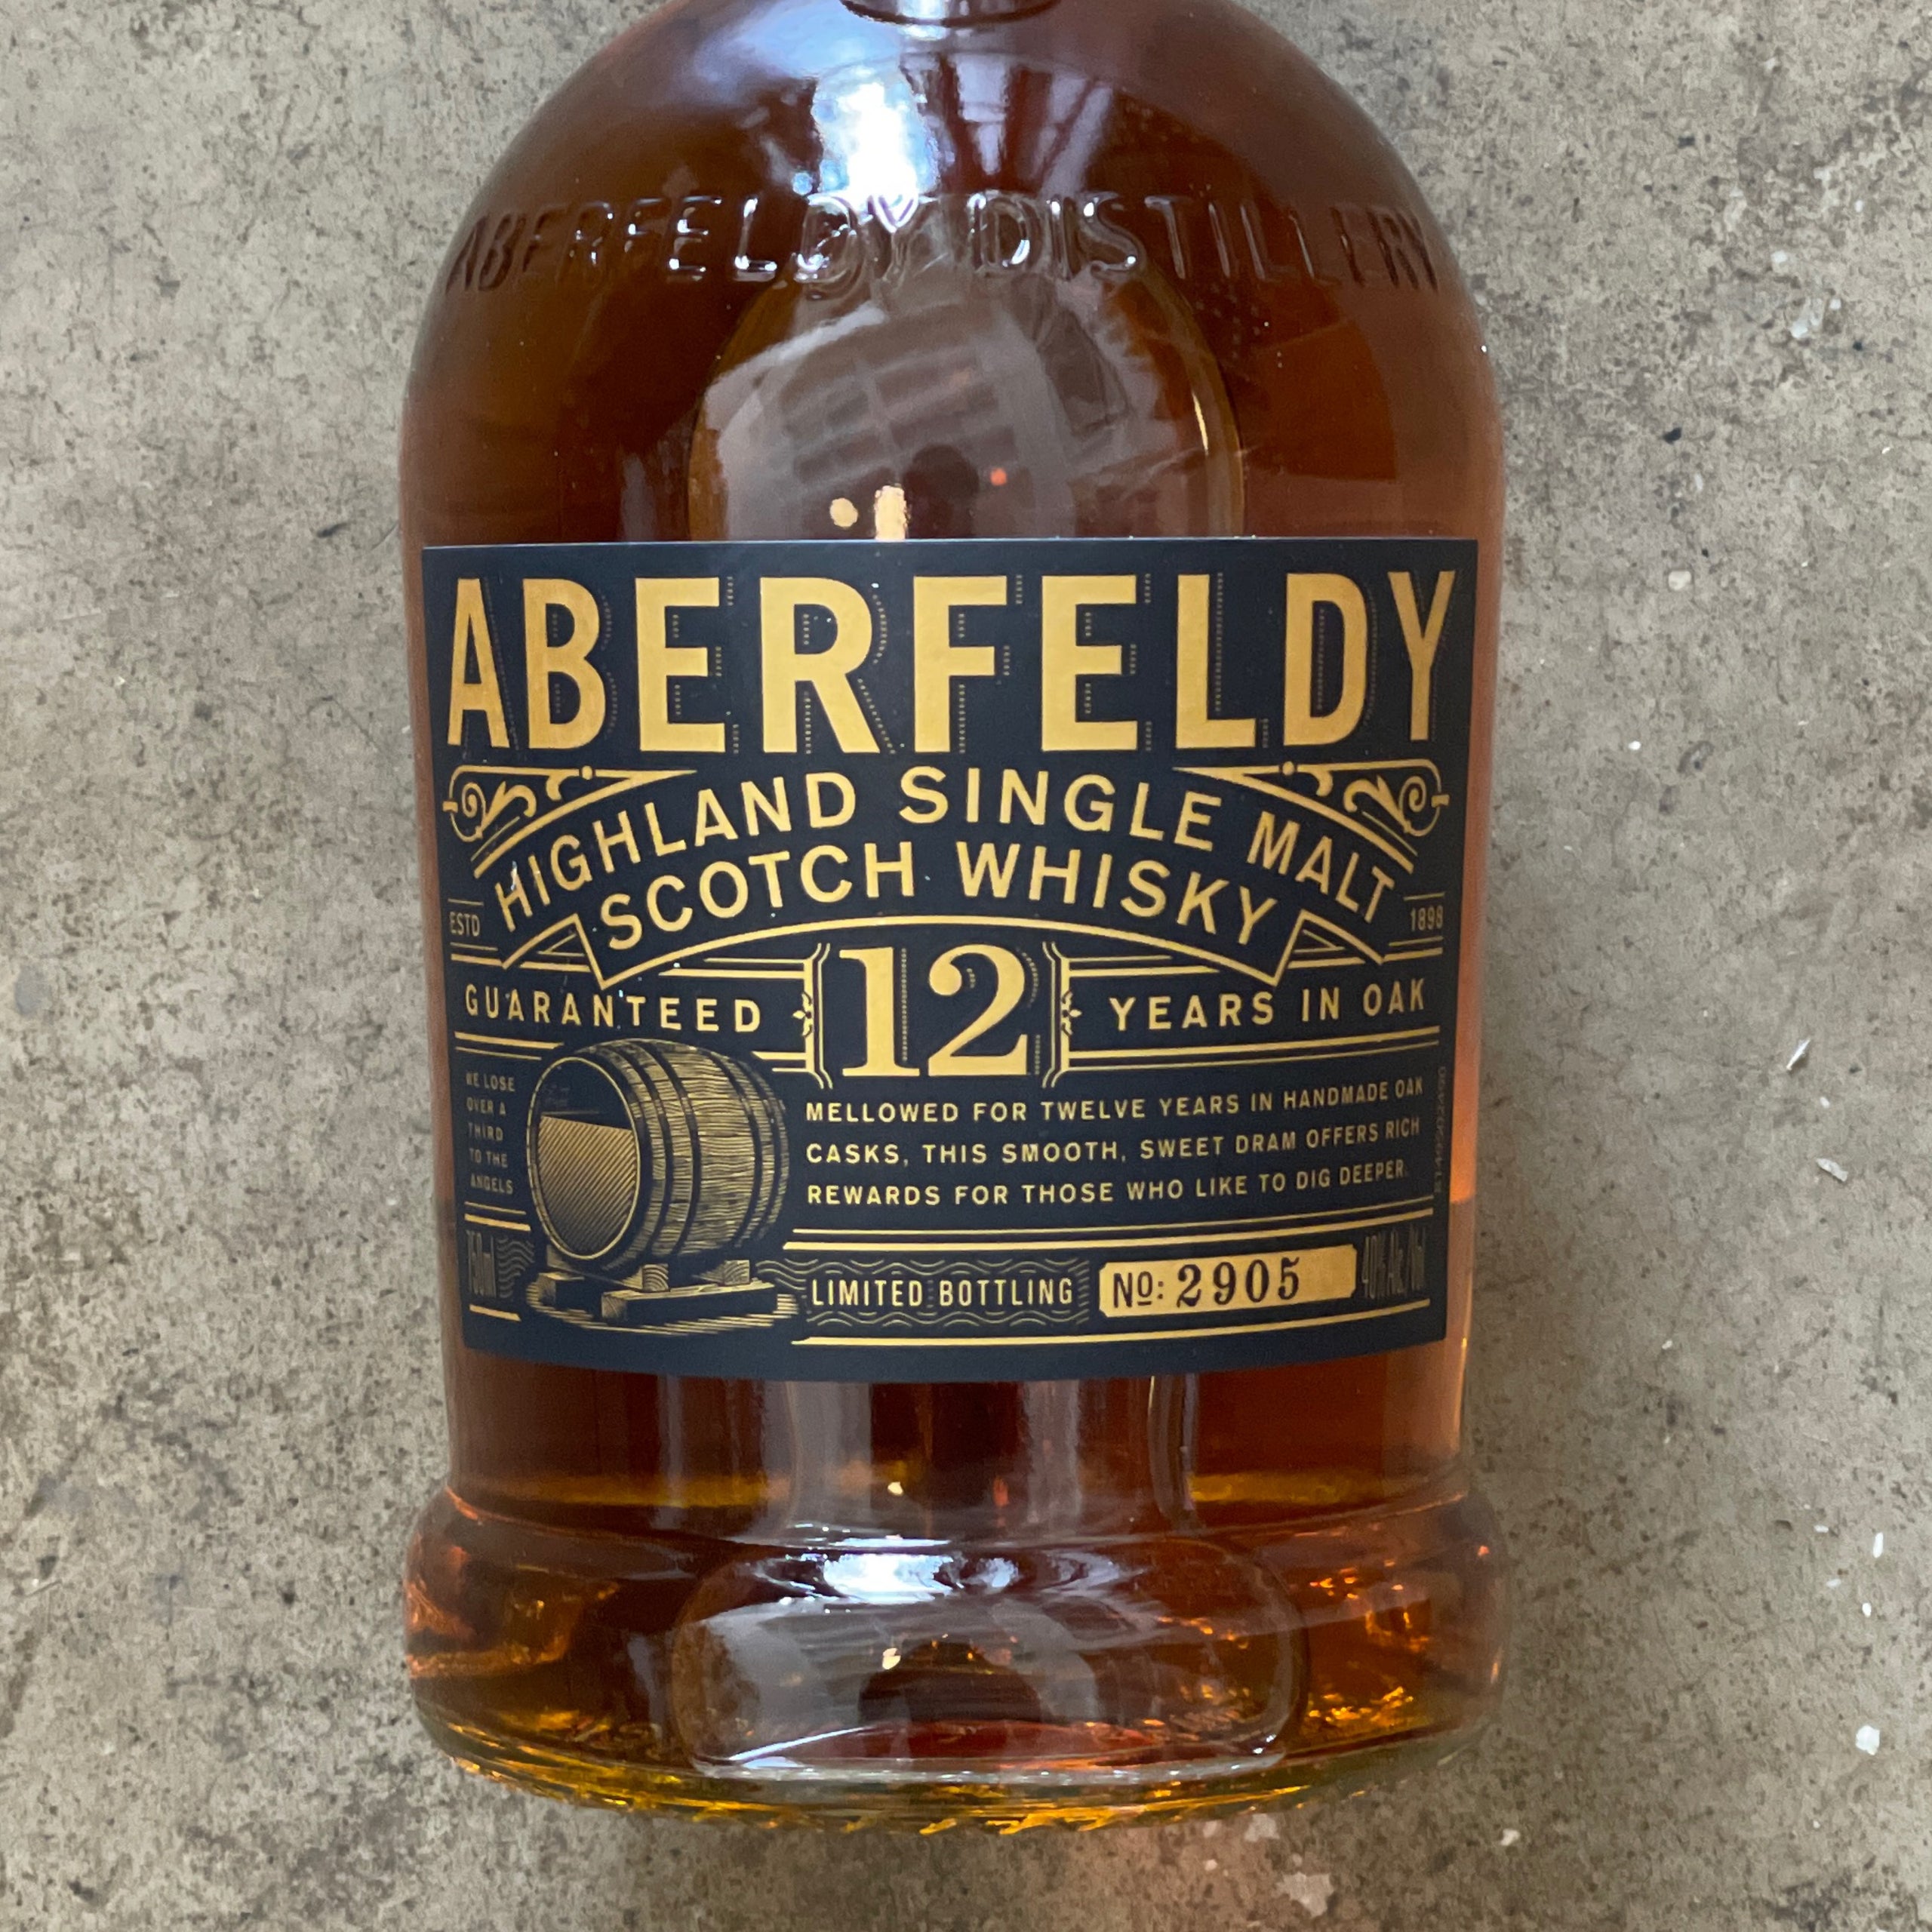 Aberfeldy, 12 Years Highlands Single Malt Scotch Whisky